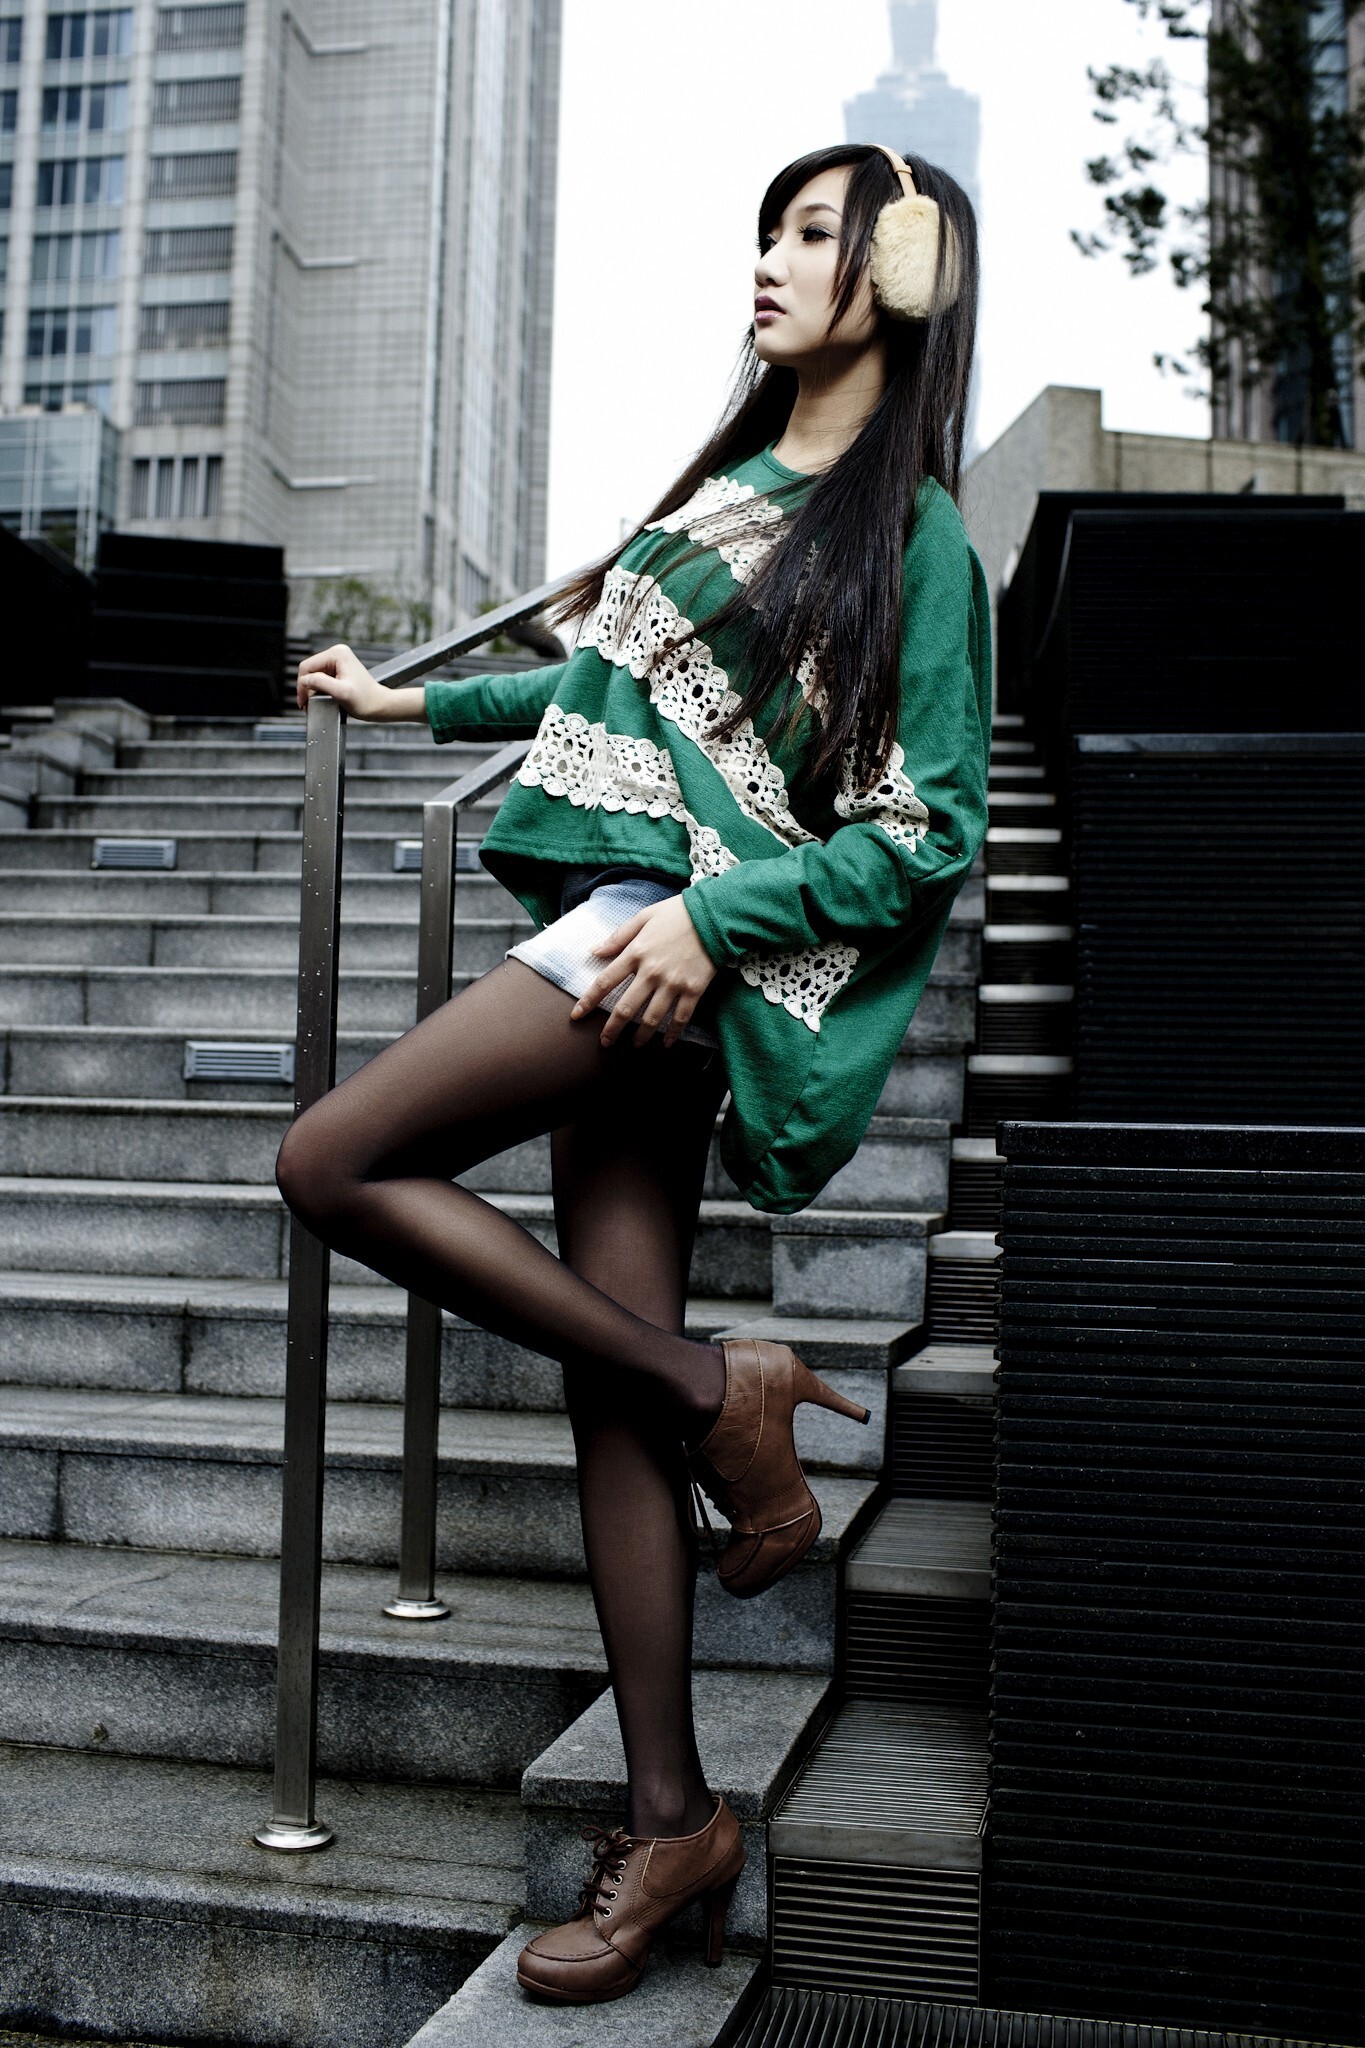 Beauty Tina photo series - Yiqing